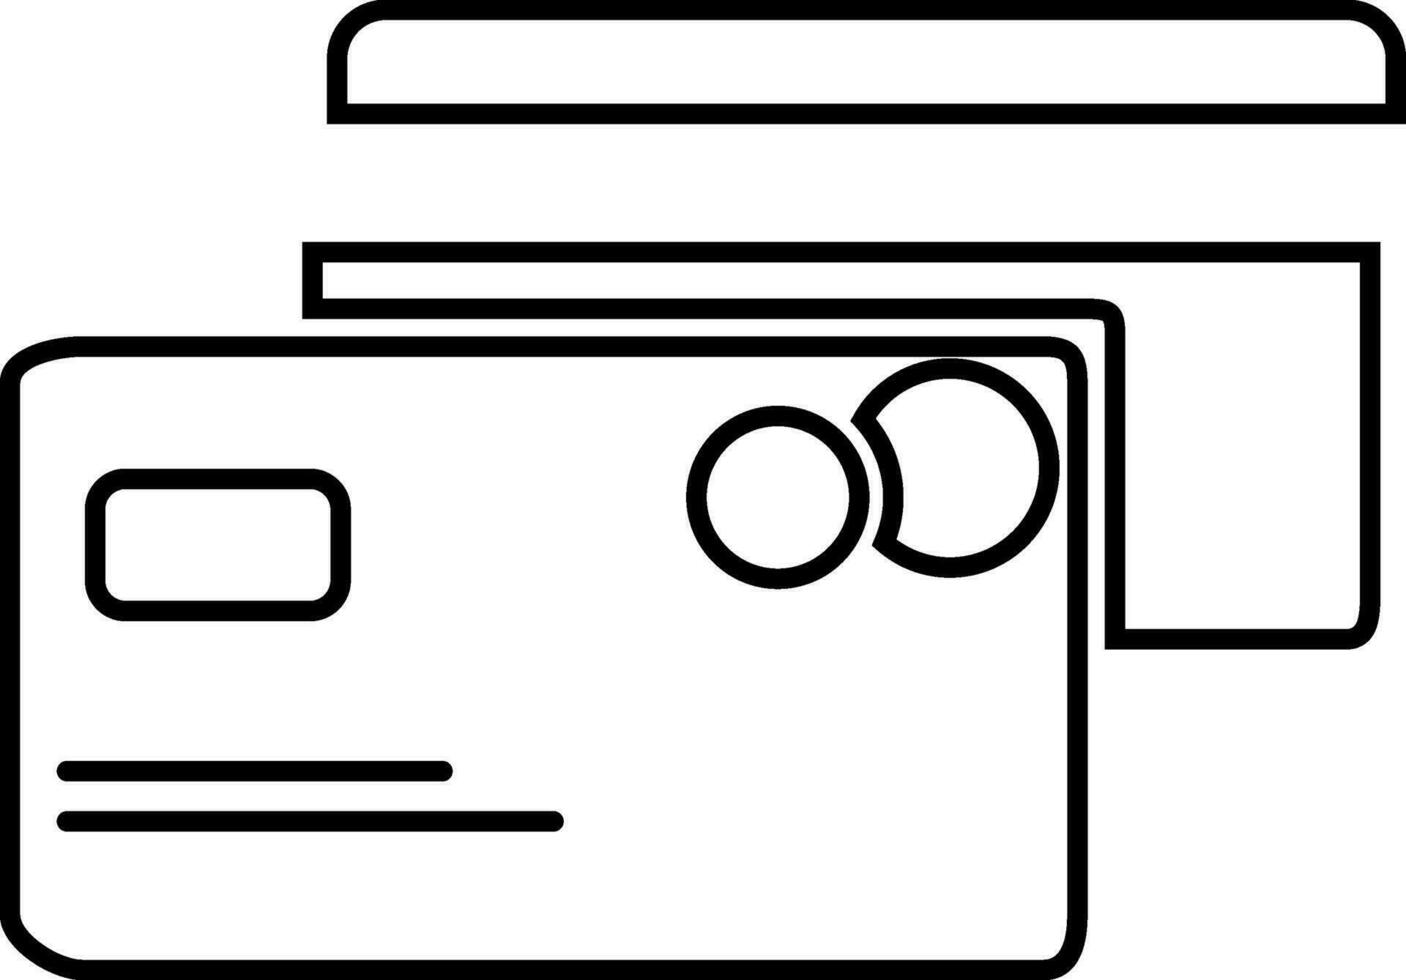 Credit cards in black line art. vector